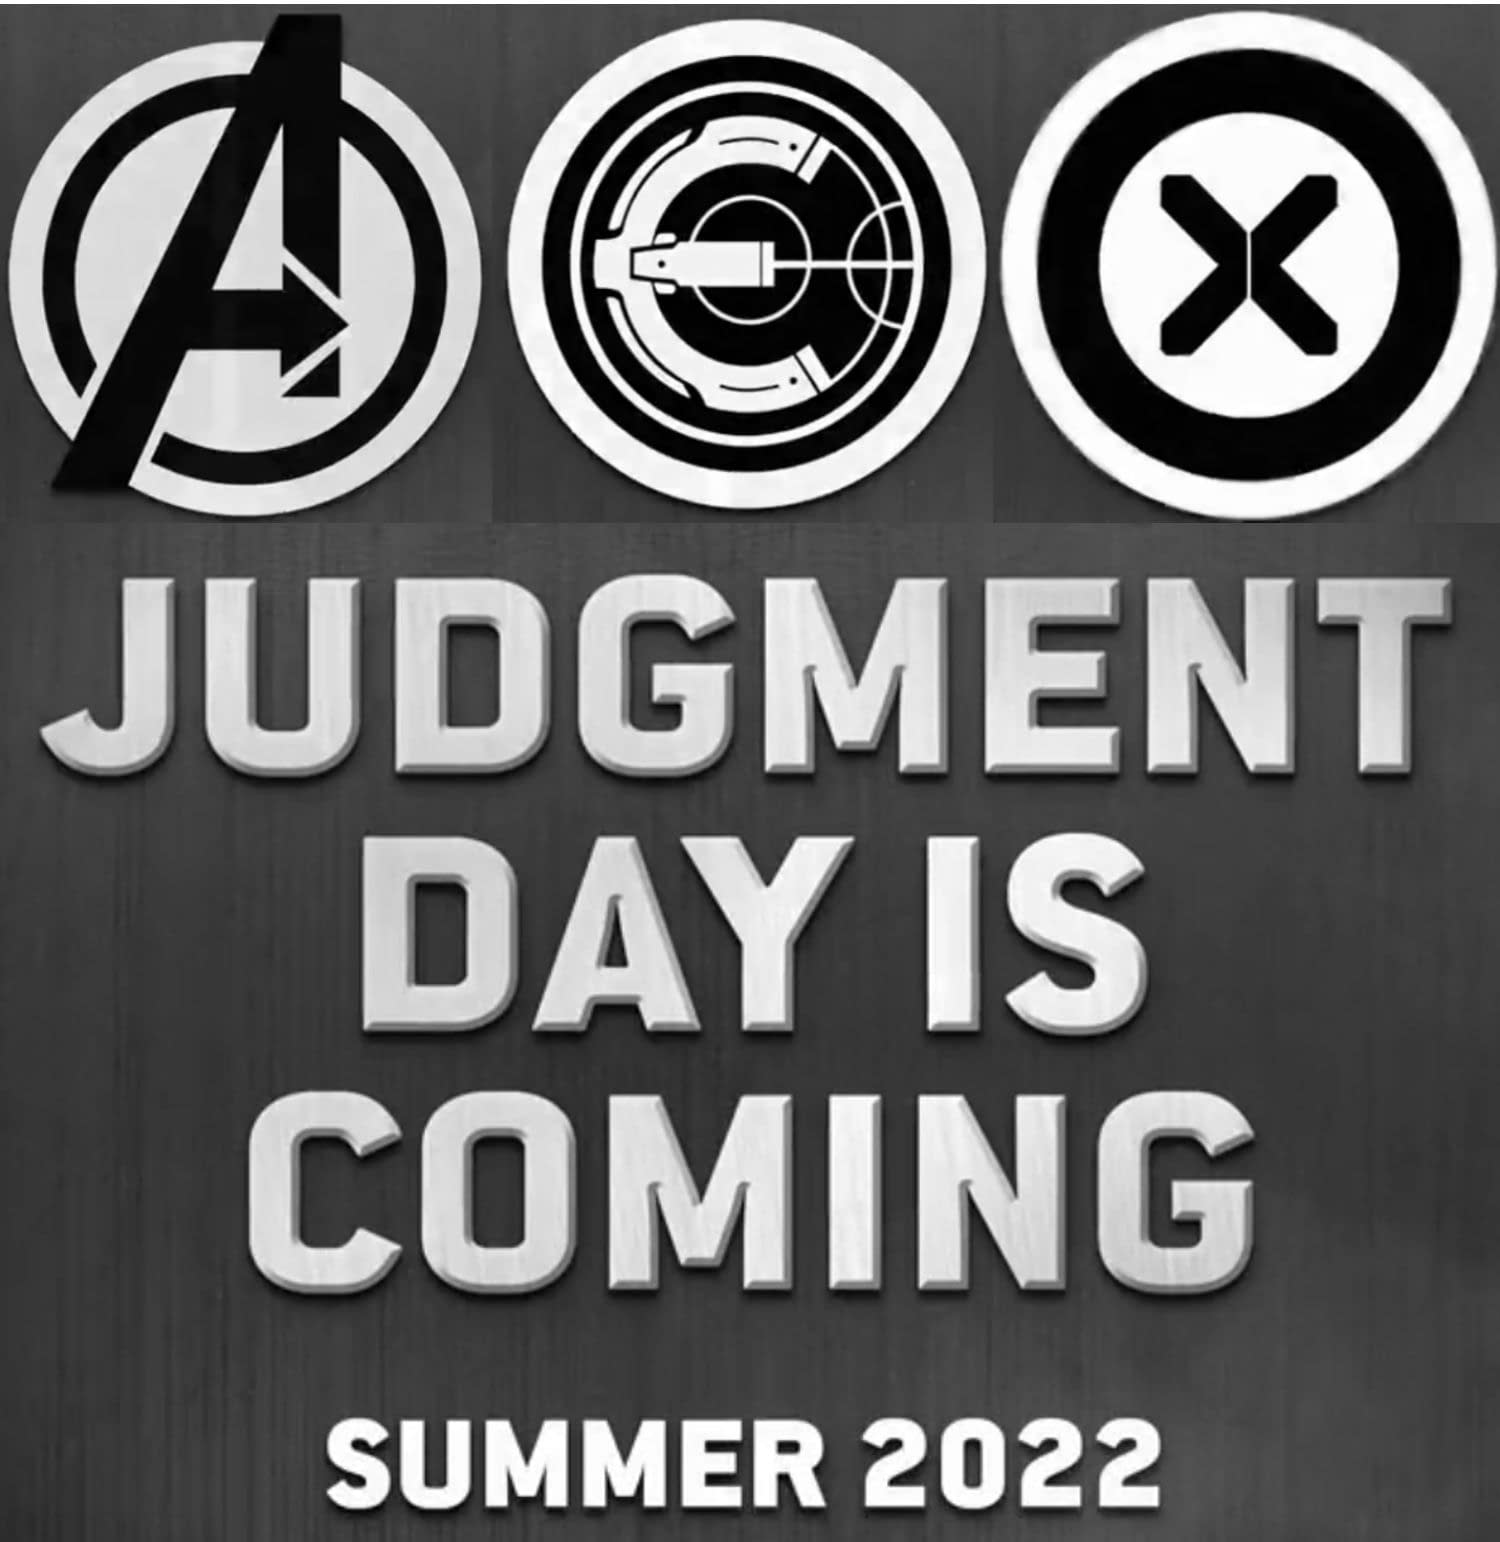 Marvel Announces Judgement Day